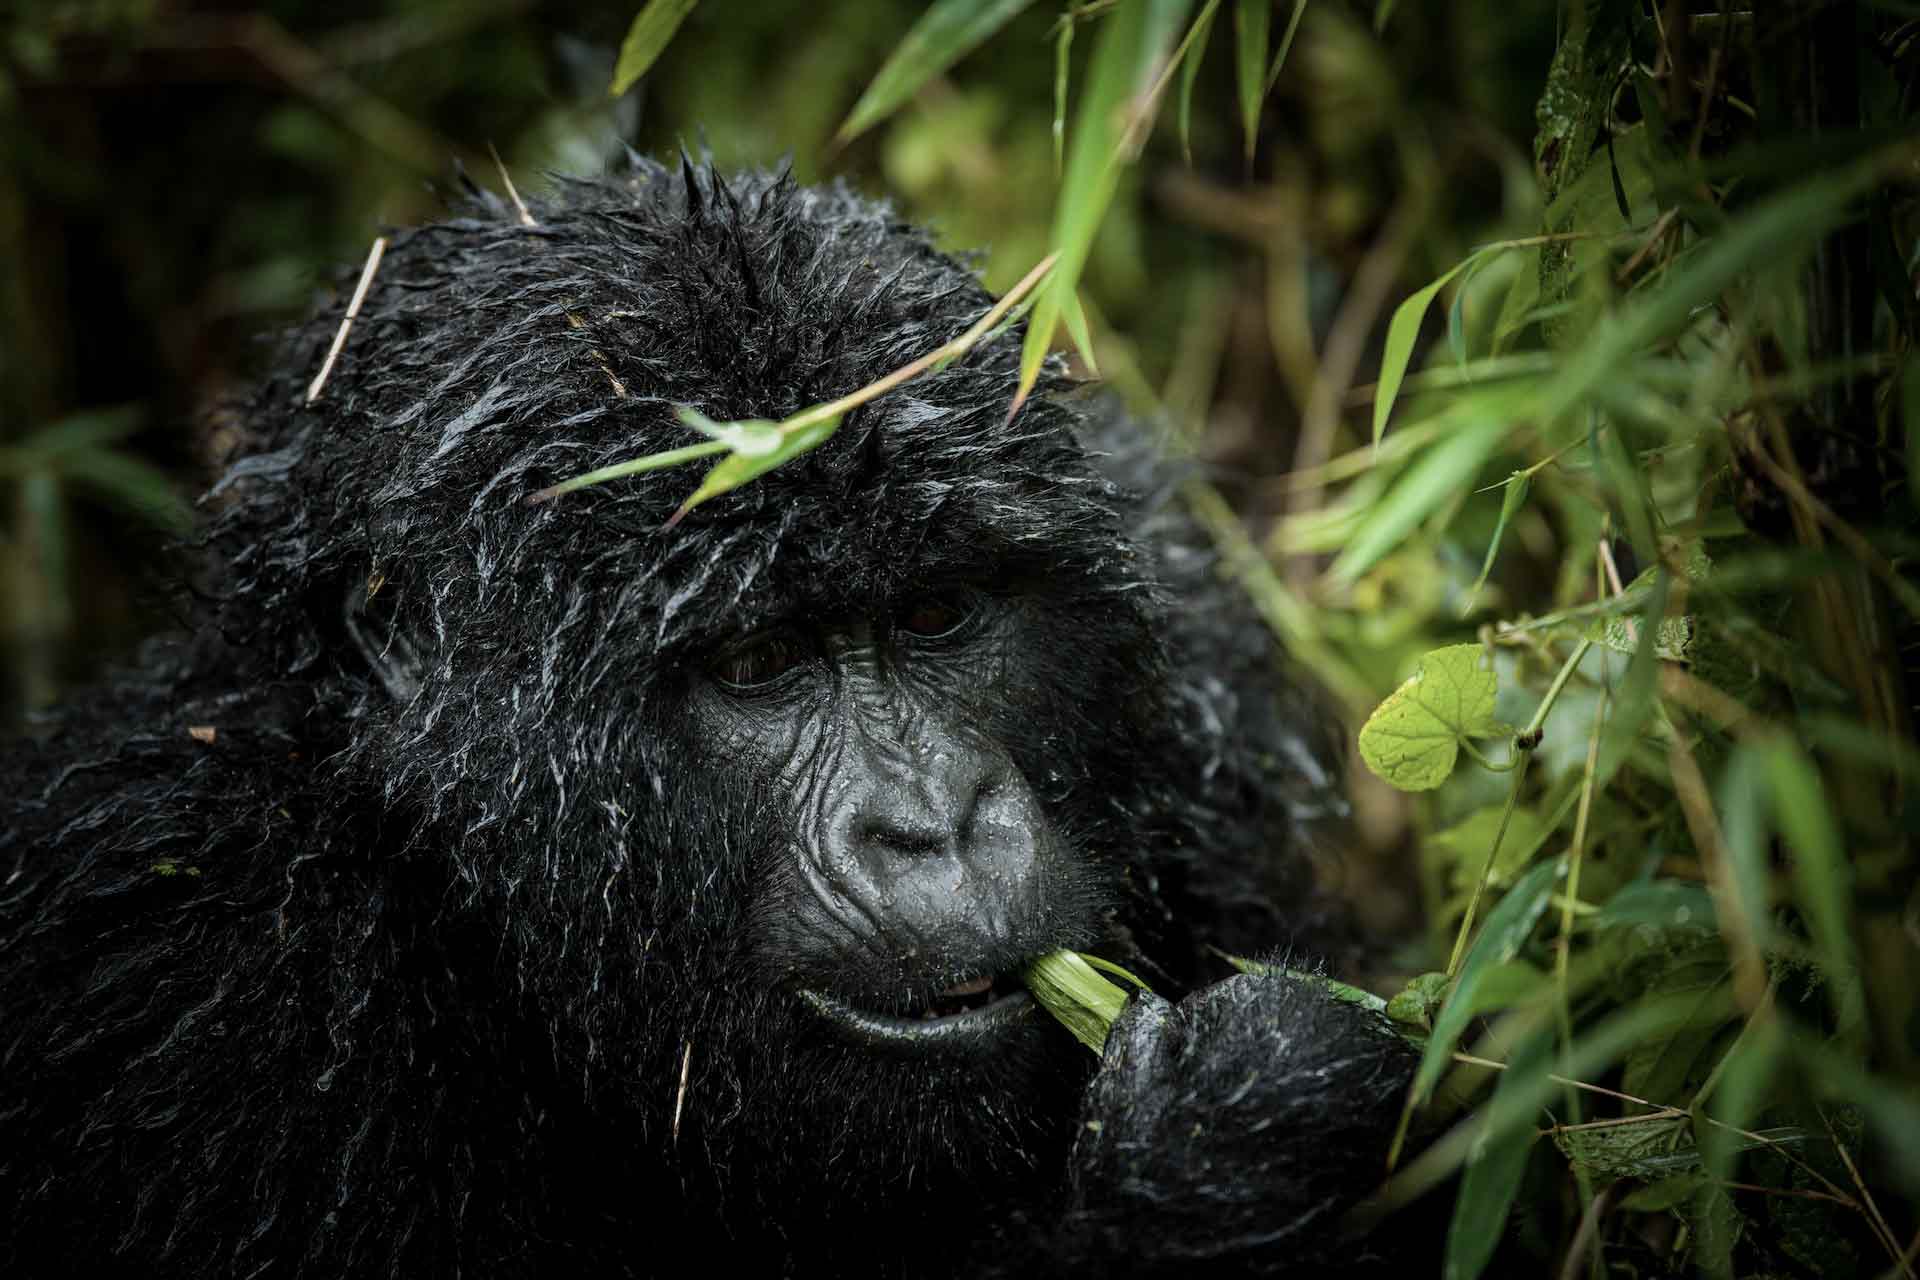 Gorilla eating in the wild, Rwanda